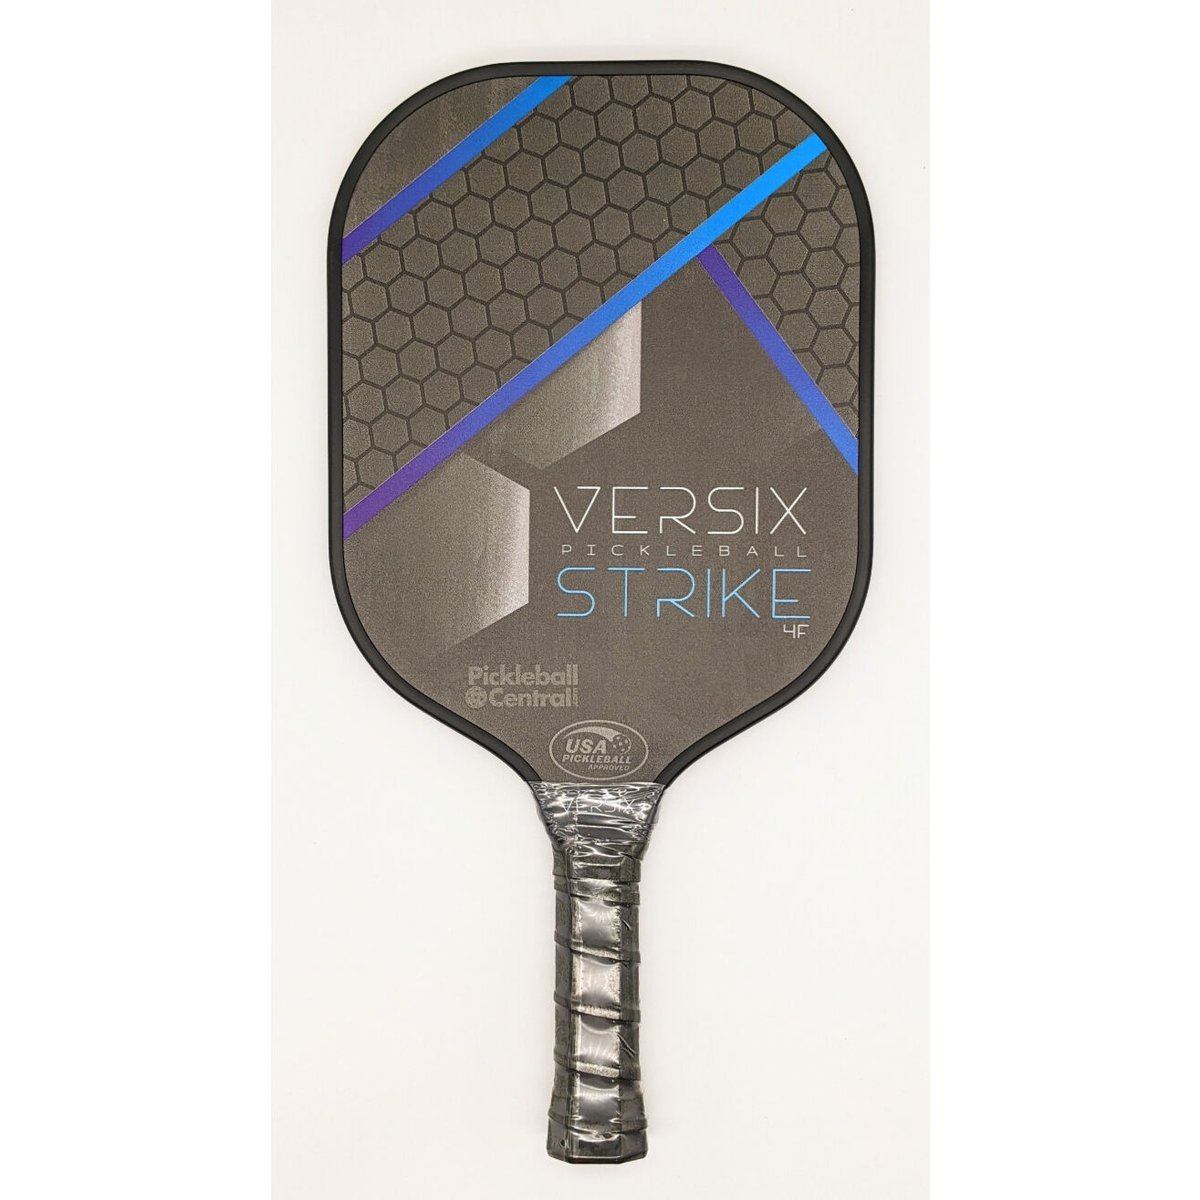 VERSIX Strike 4F Composite Paddle Blue | ピックルボー...